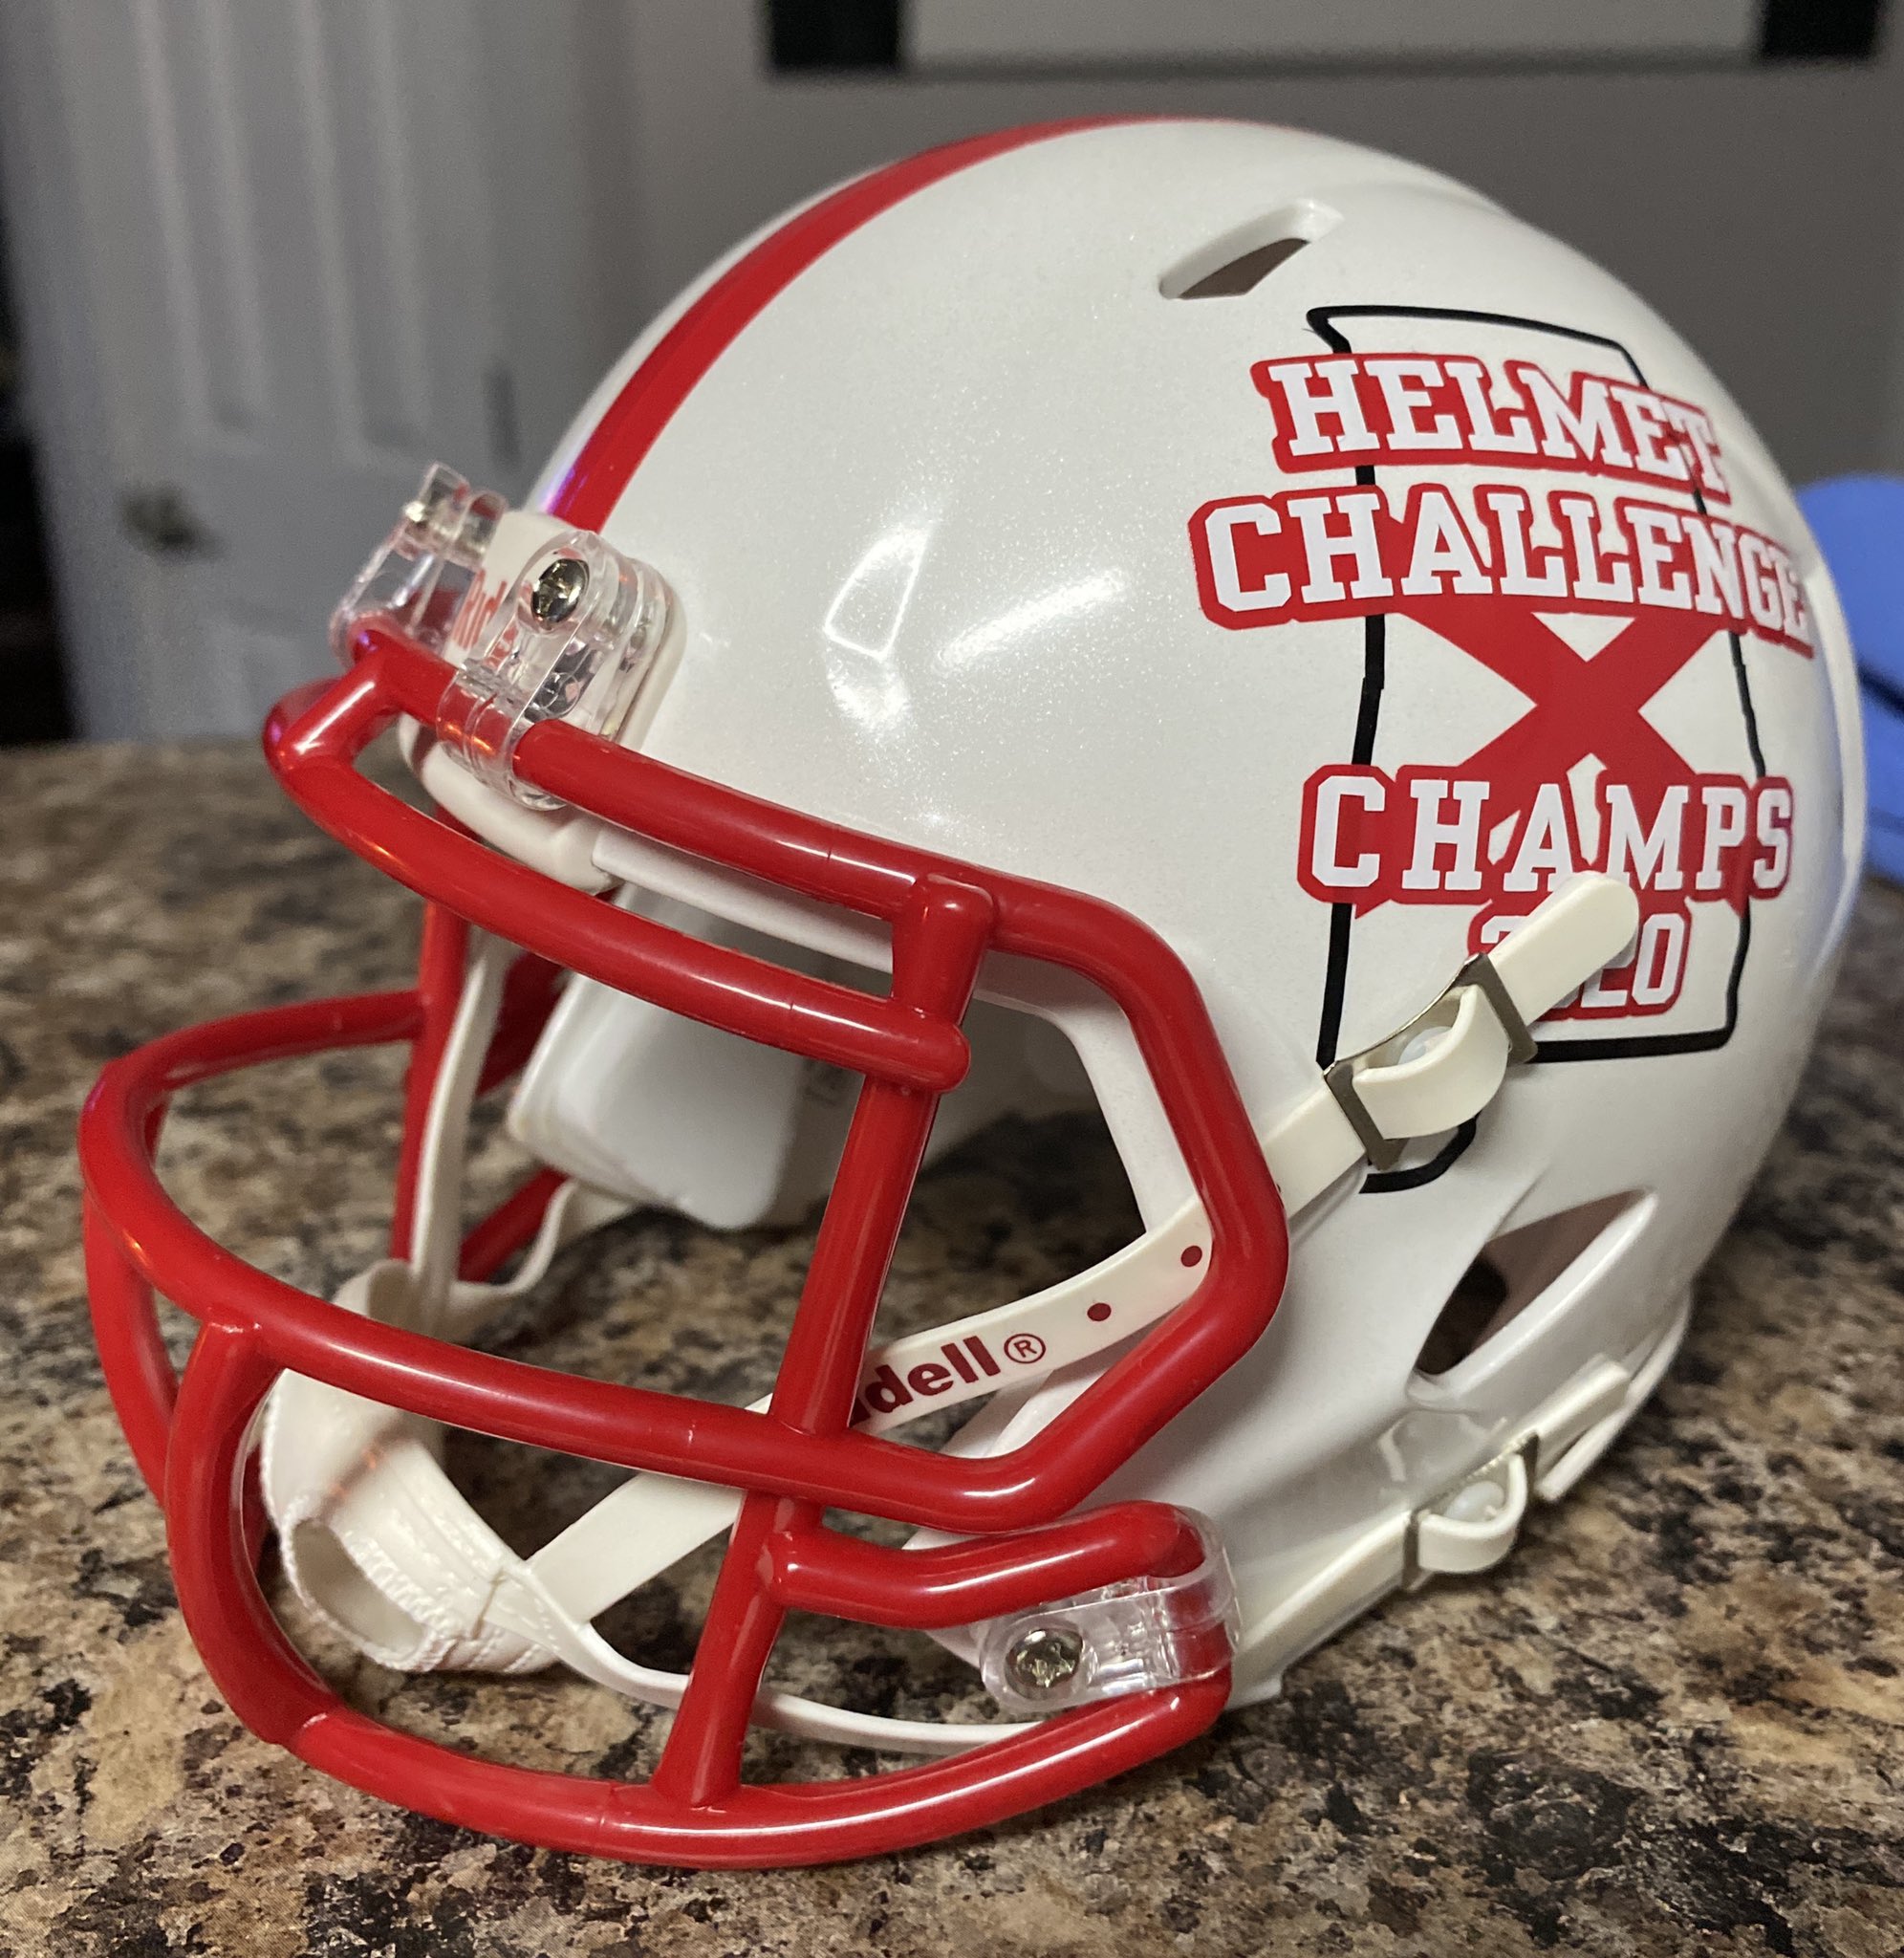 Moody wins Alabama Helmet Challenge championship